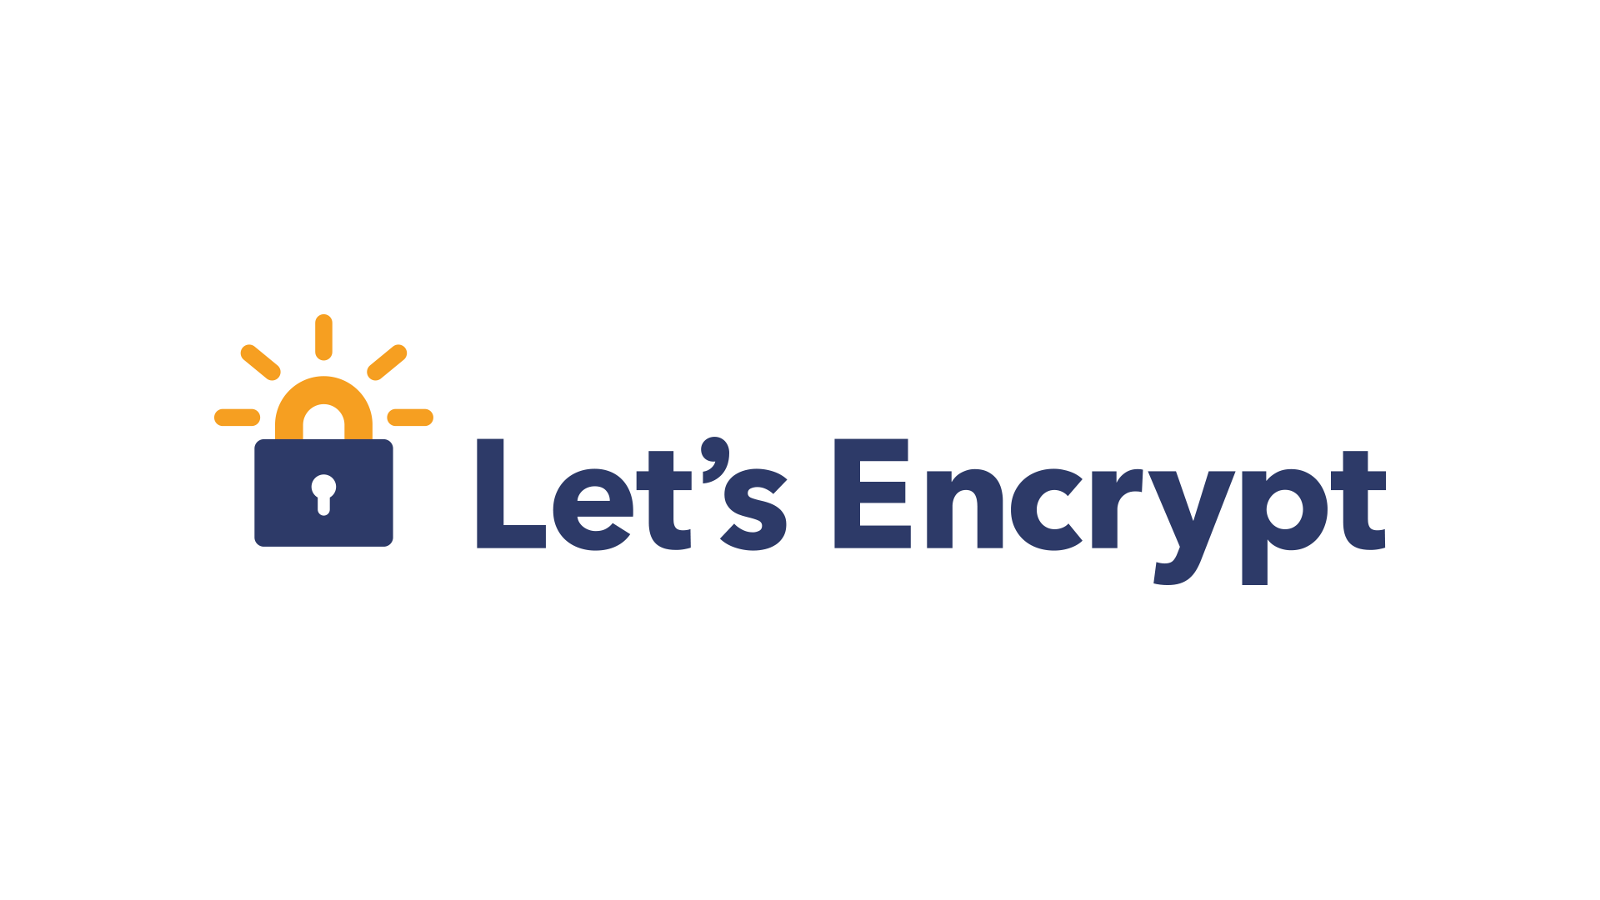 Let's Encrypt 讓我們加密吧~